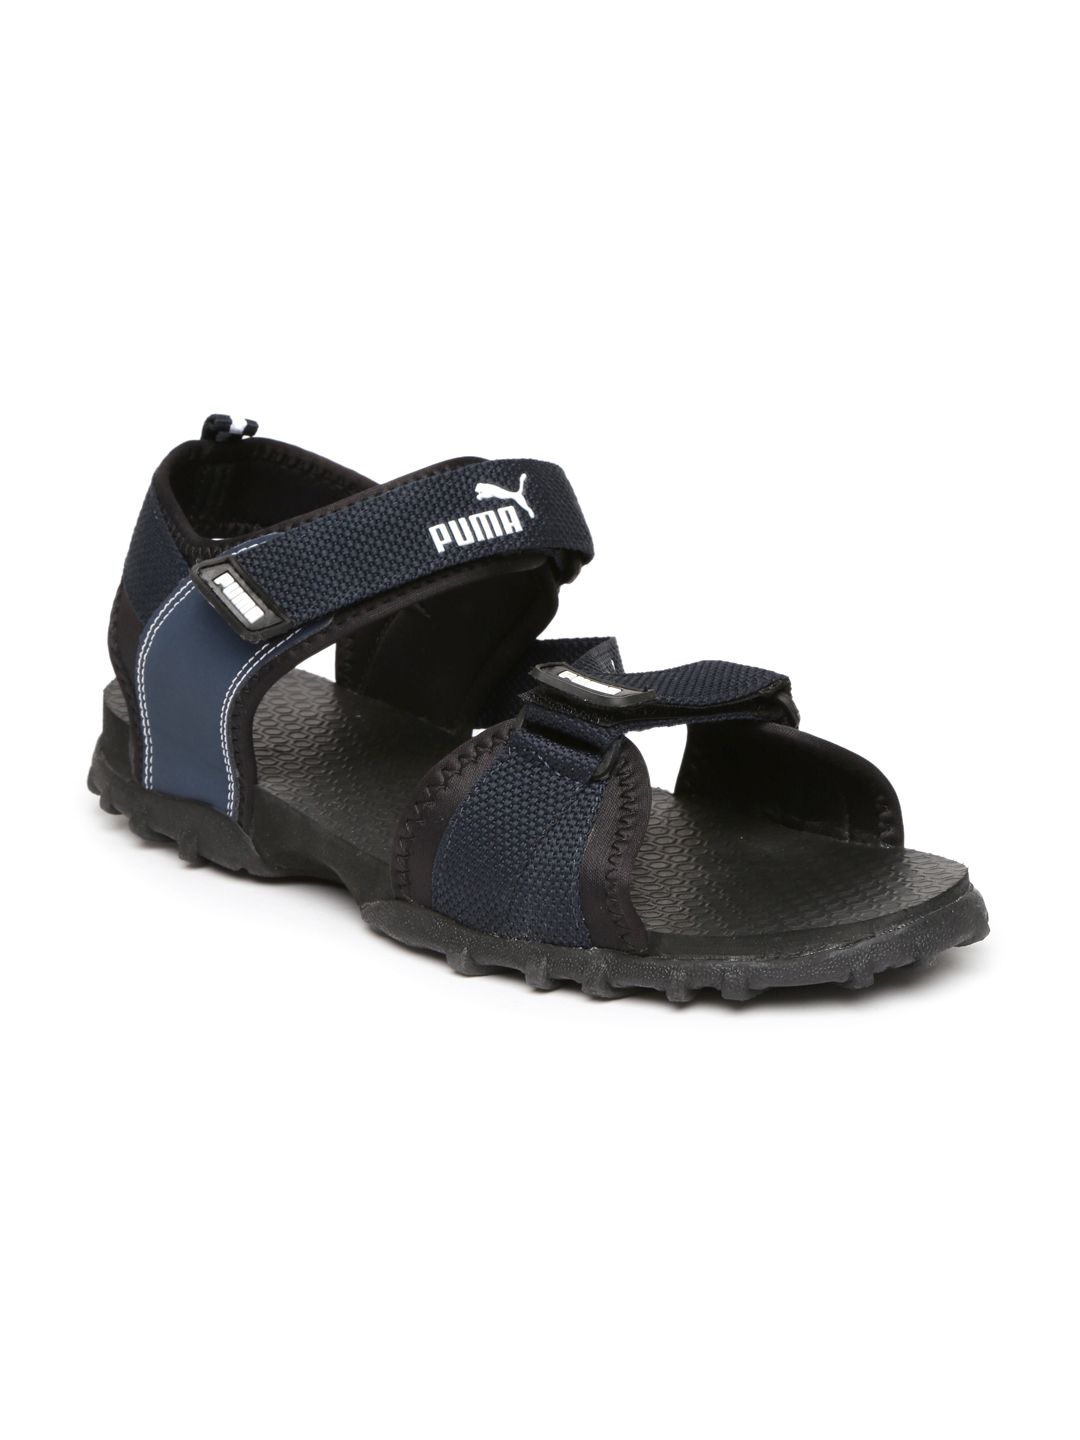 black puma sandals